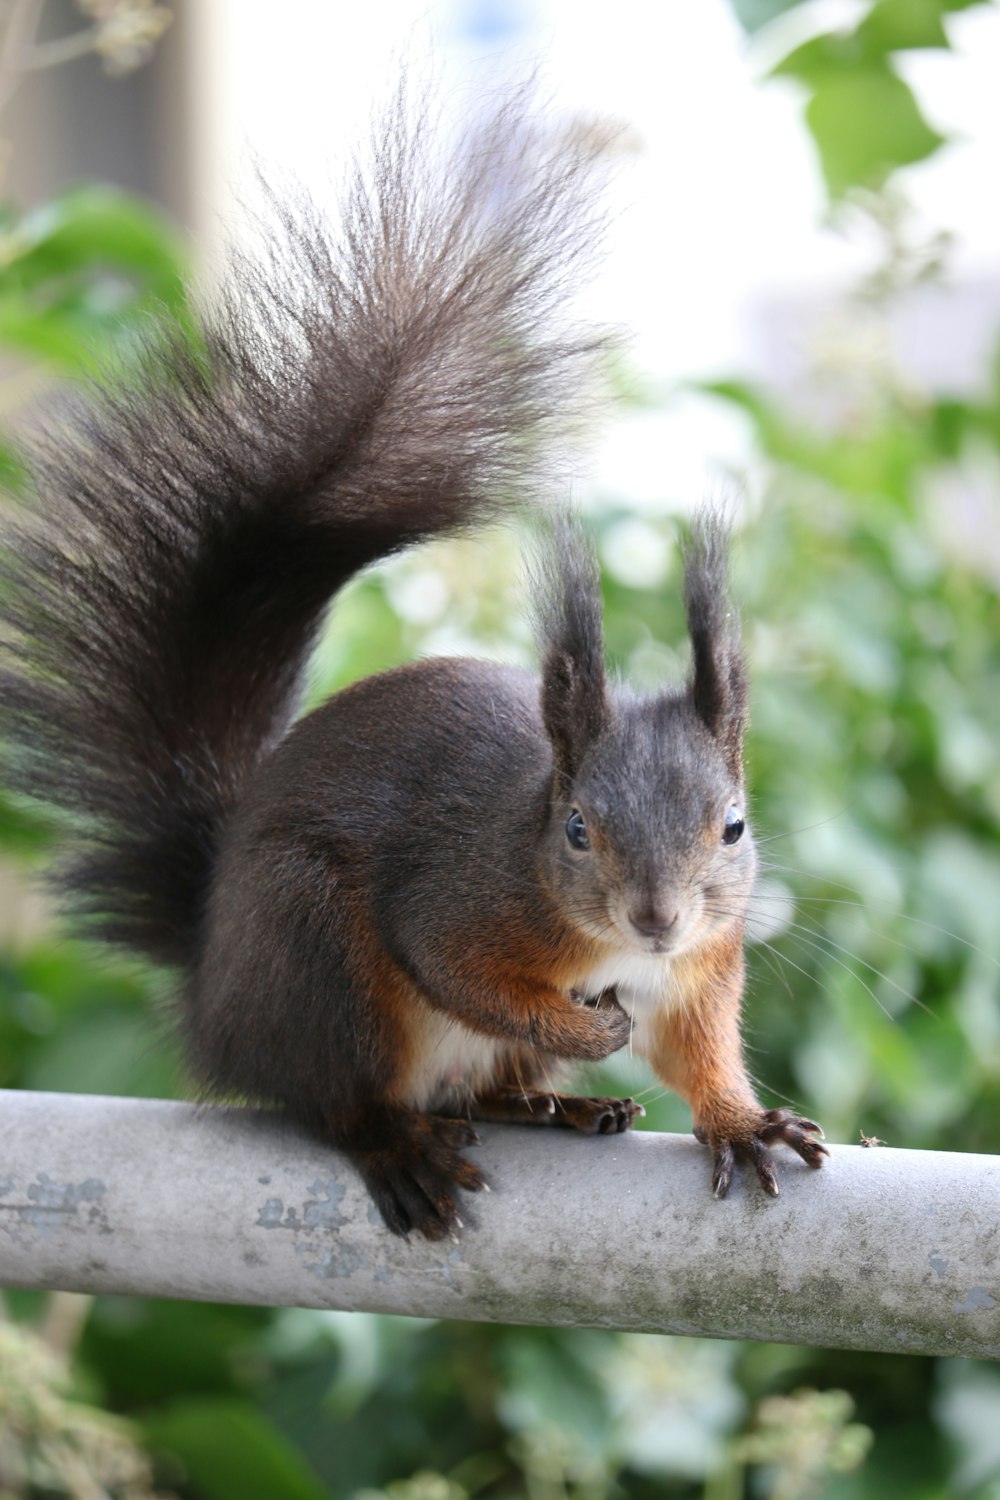 a squirrel is sitting on a metal rail